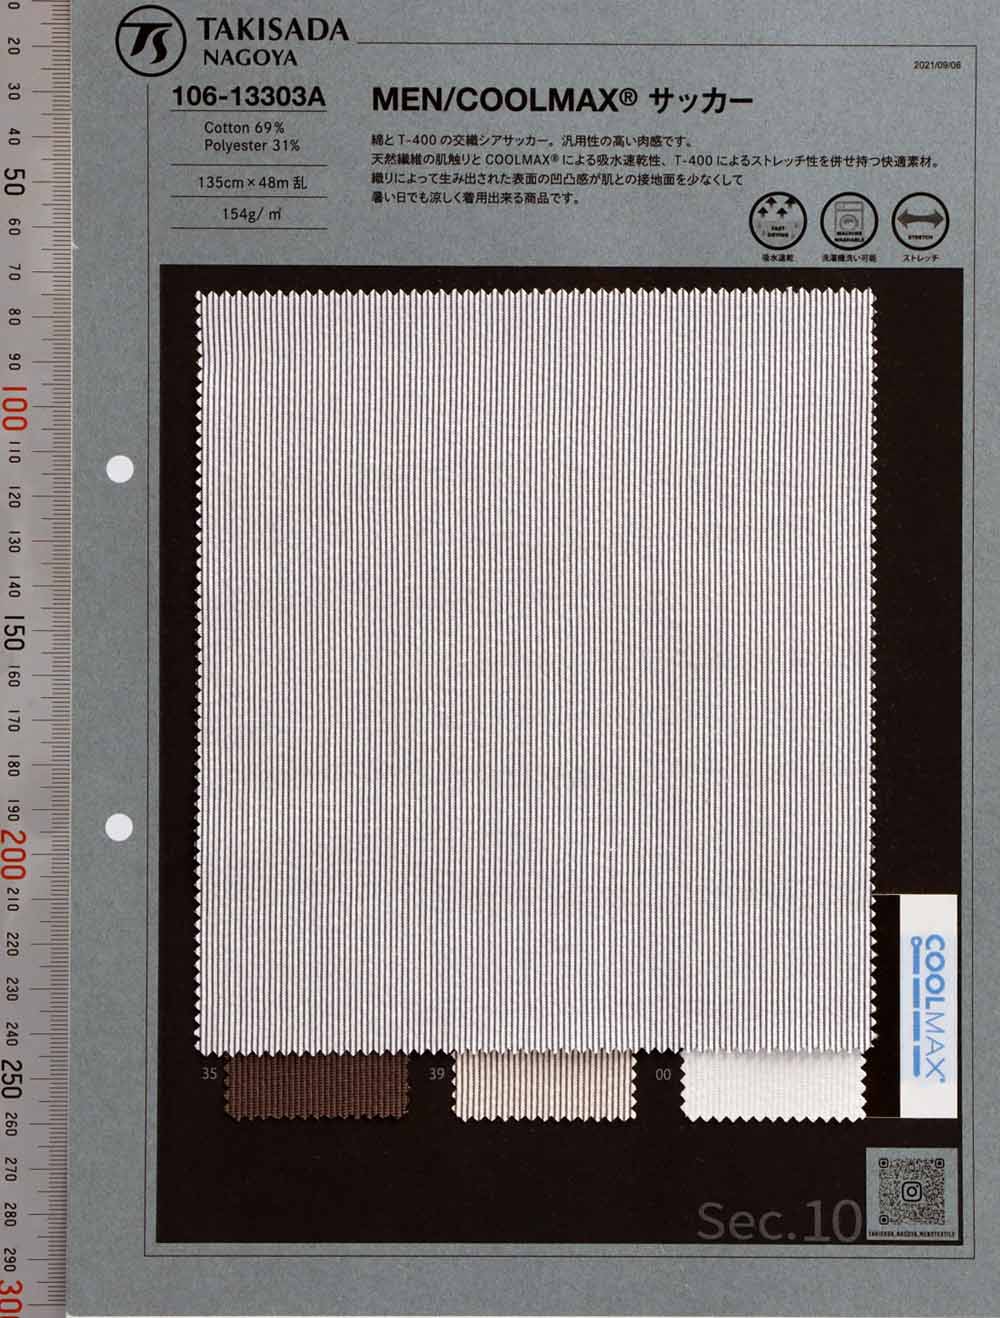 106-13303A MEN / COOLMAX® Cordlane Seersucker[Textile / Fabric] Takisada Nagoya